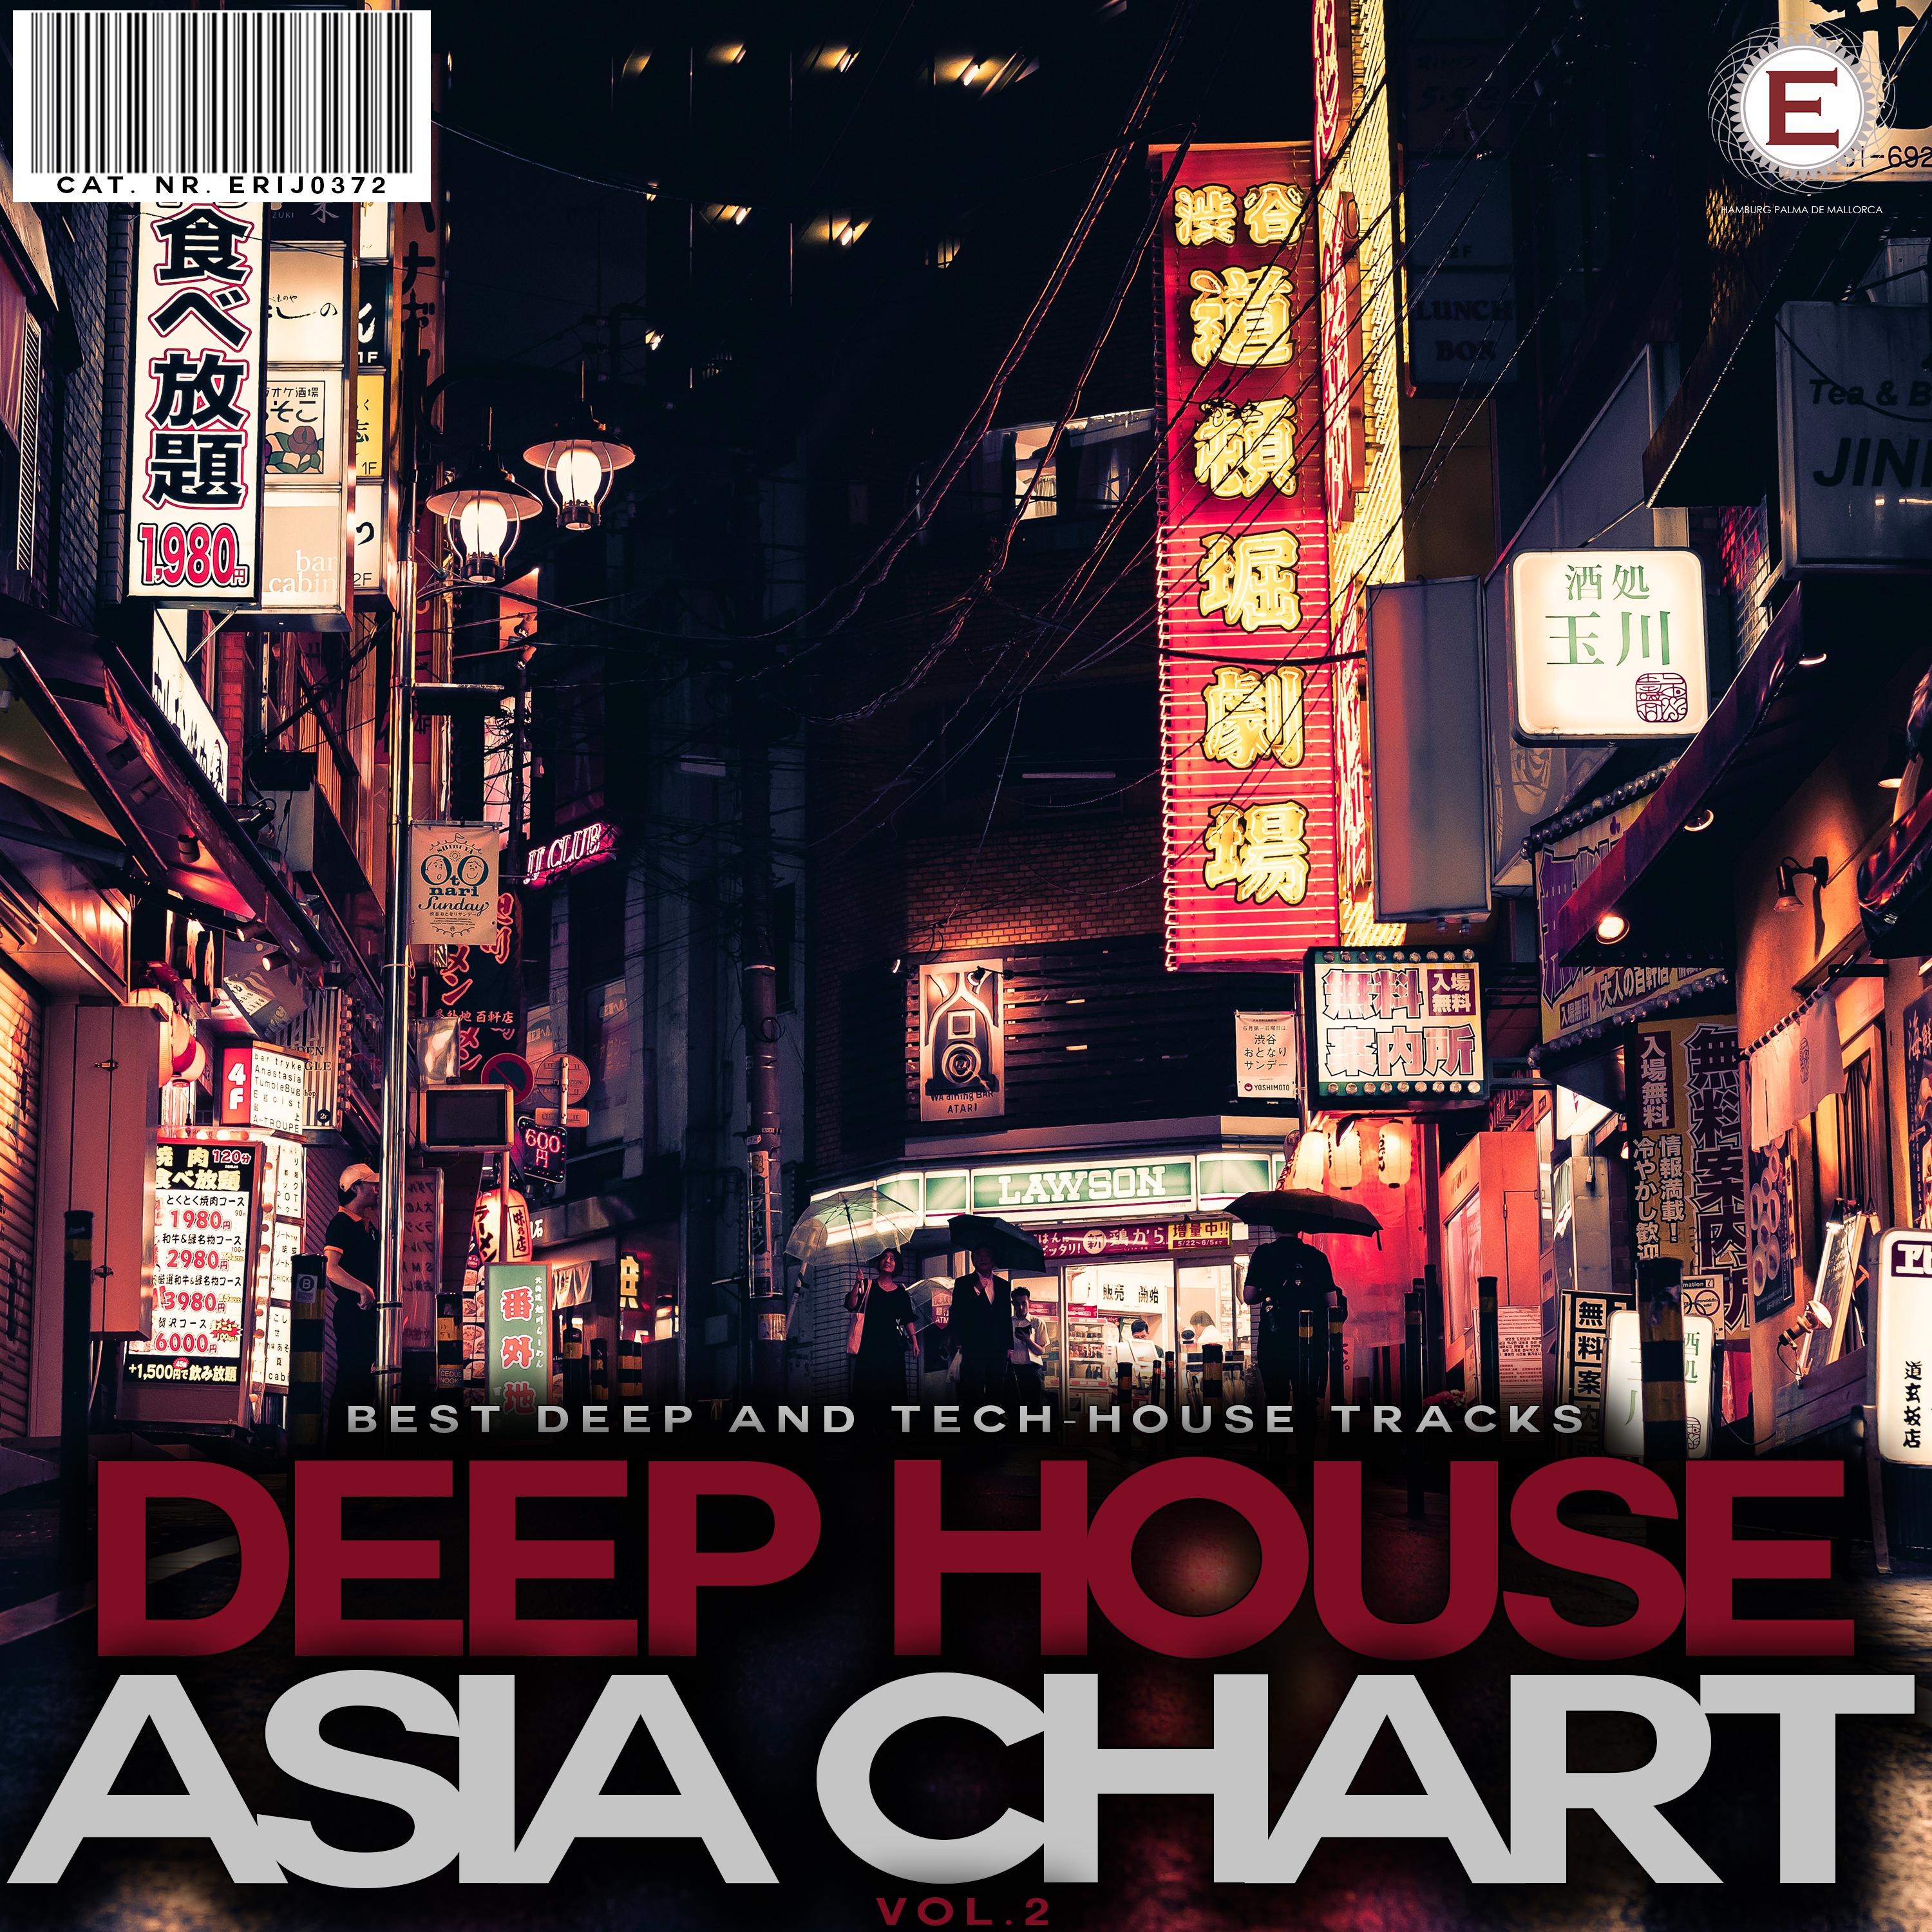 Deep House Asia Chart, Vol. 2